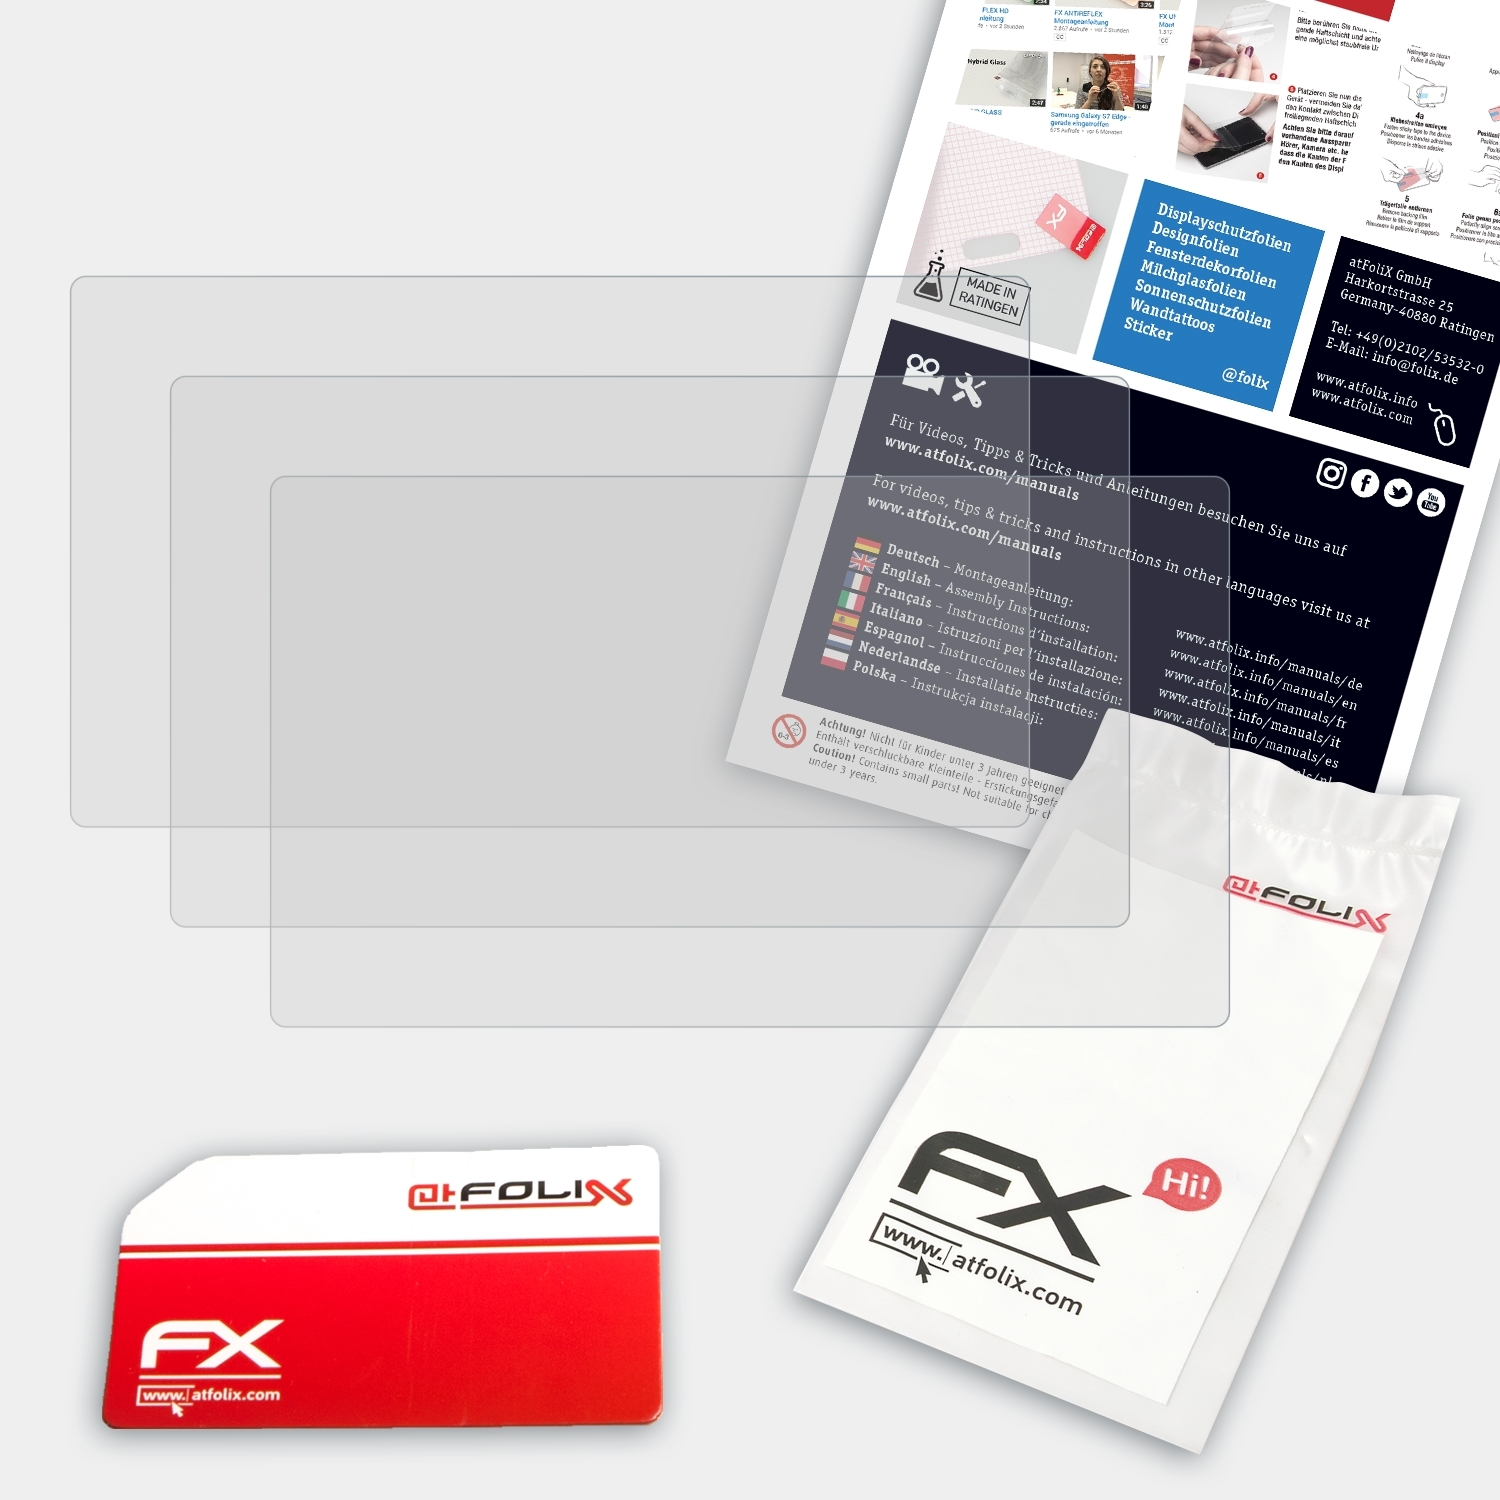 ATFOLIX 3x Panasonic HC-VXF11) FX-Antireflex Displayschutz(für